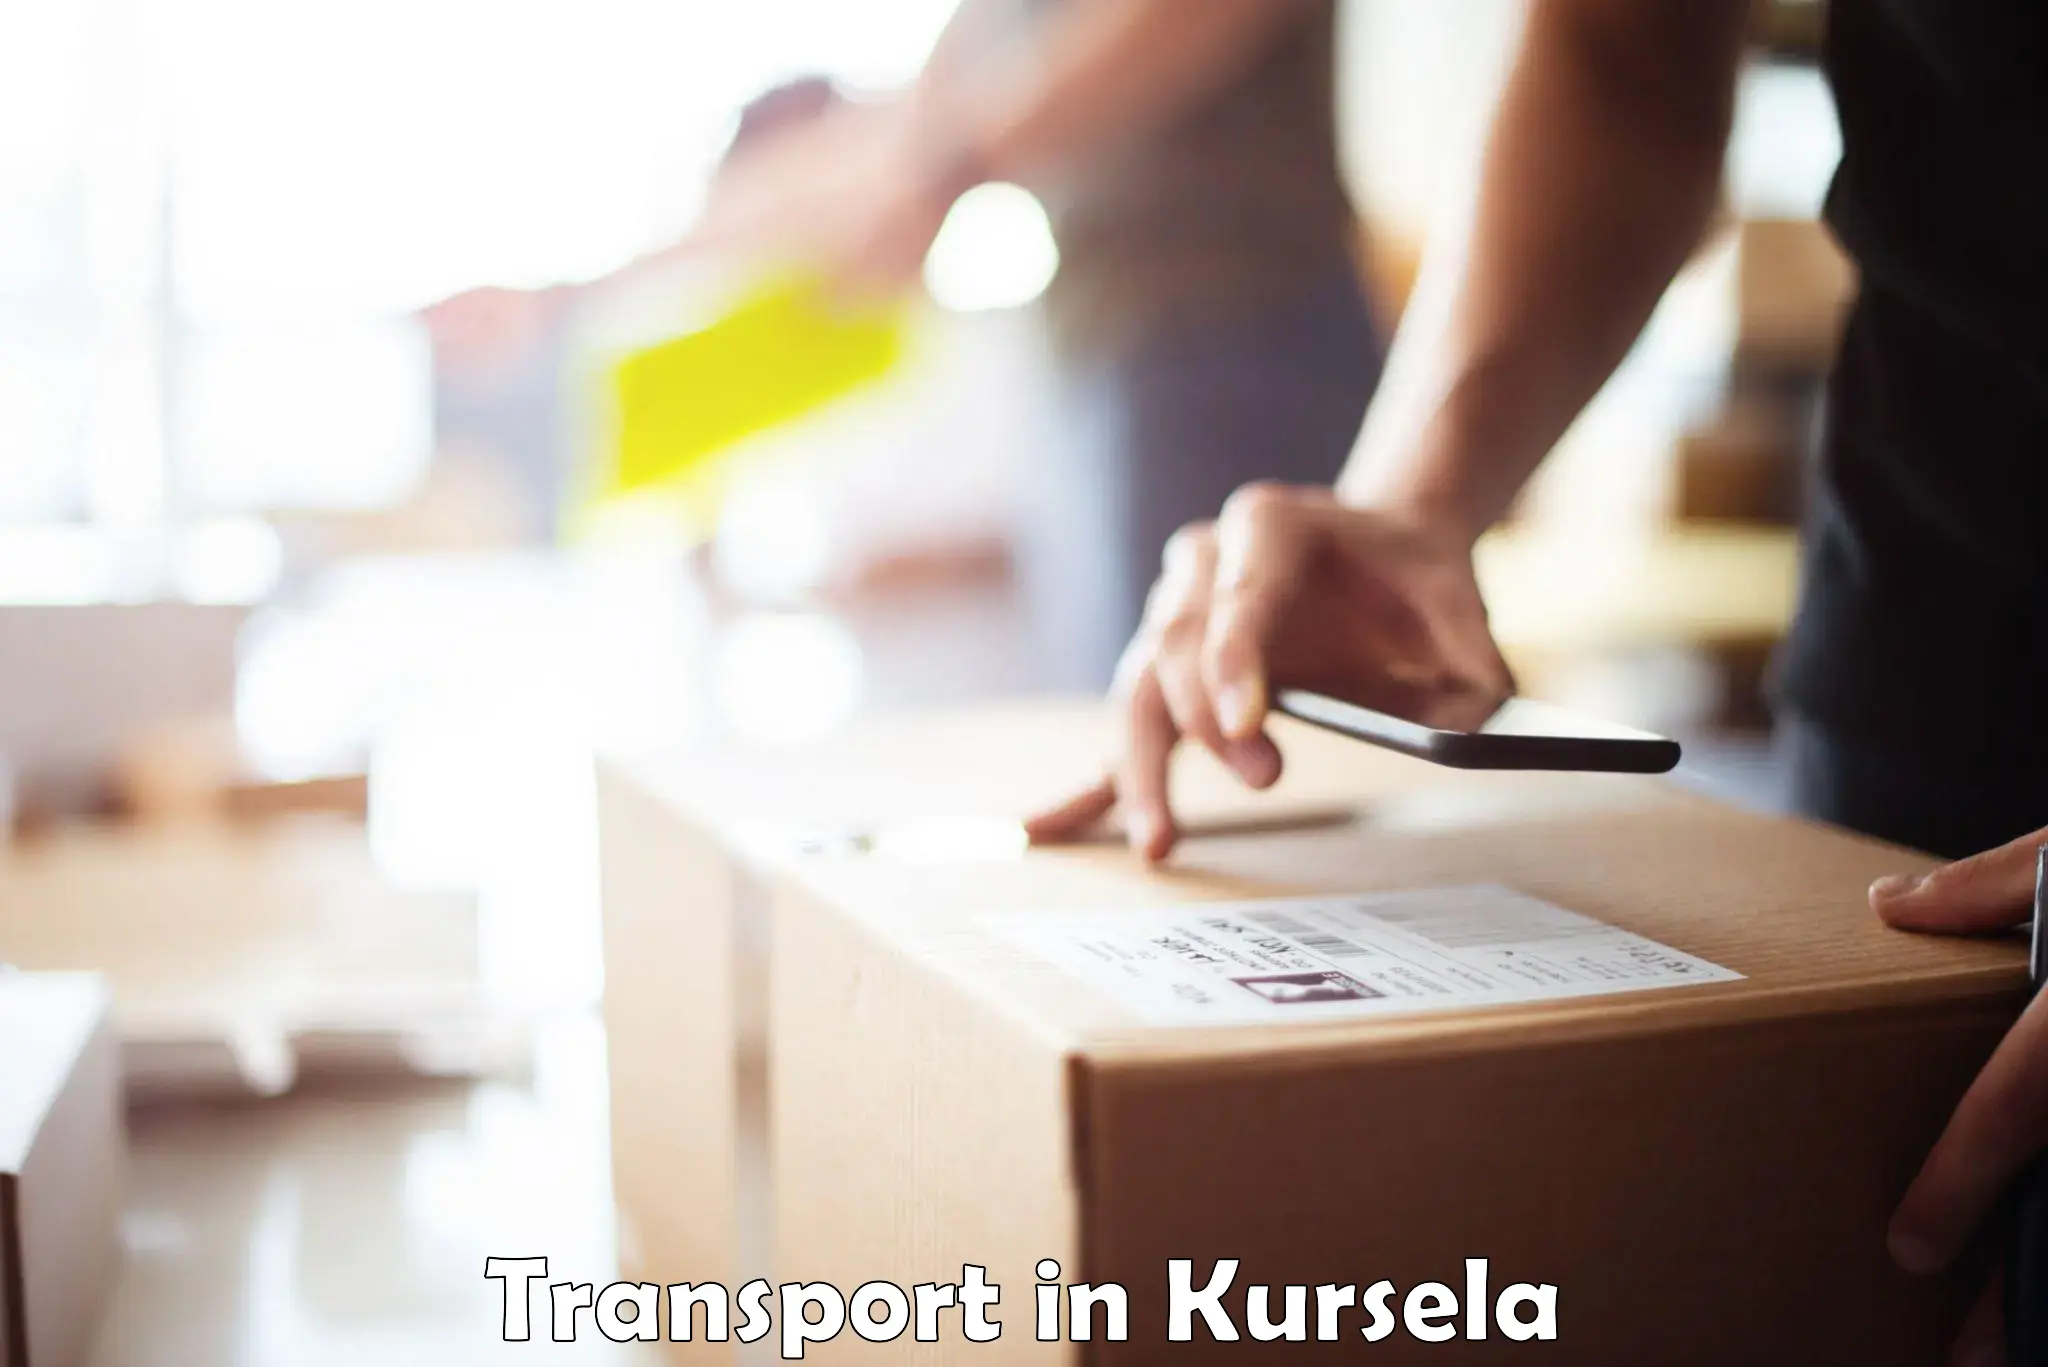 Furniture transport service in Kursela